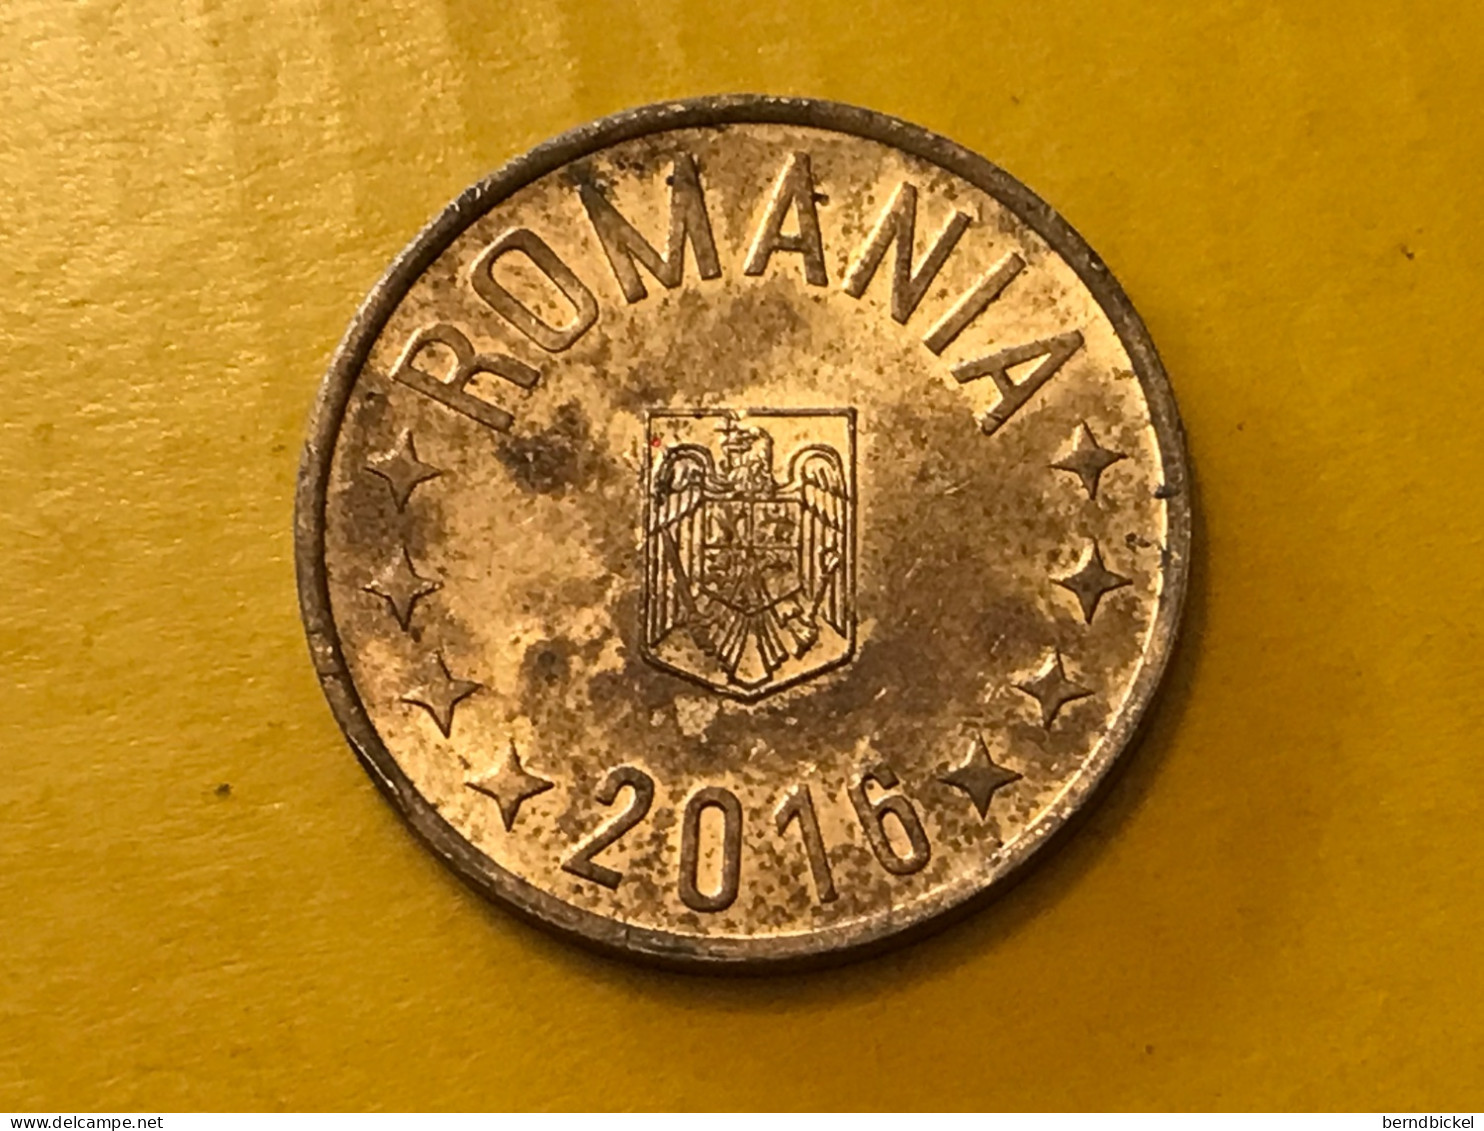 Münze Münzen Umlaufmünze Rumänien 50 Bani 2016 - Rumänien